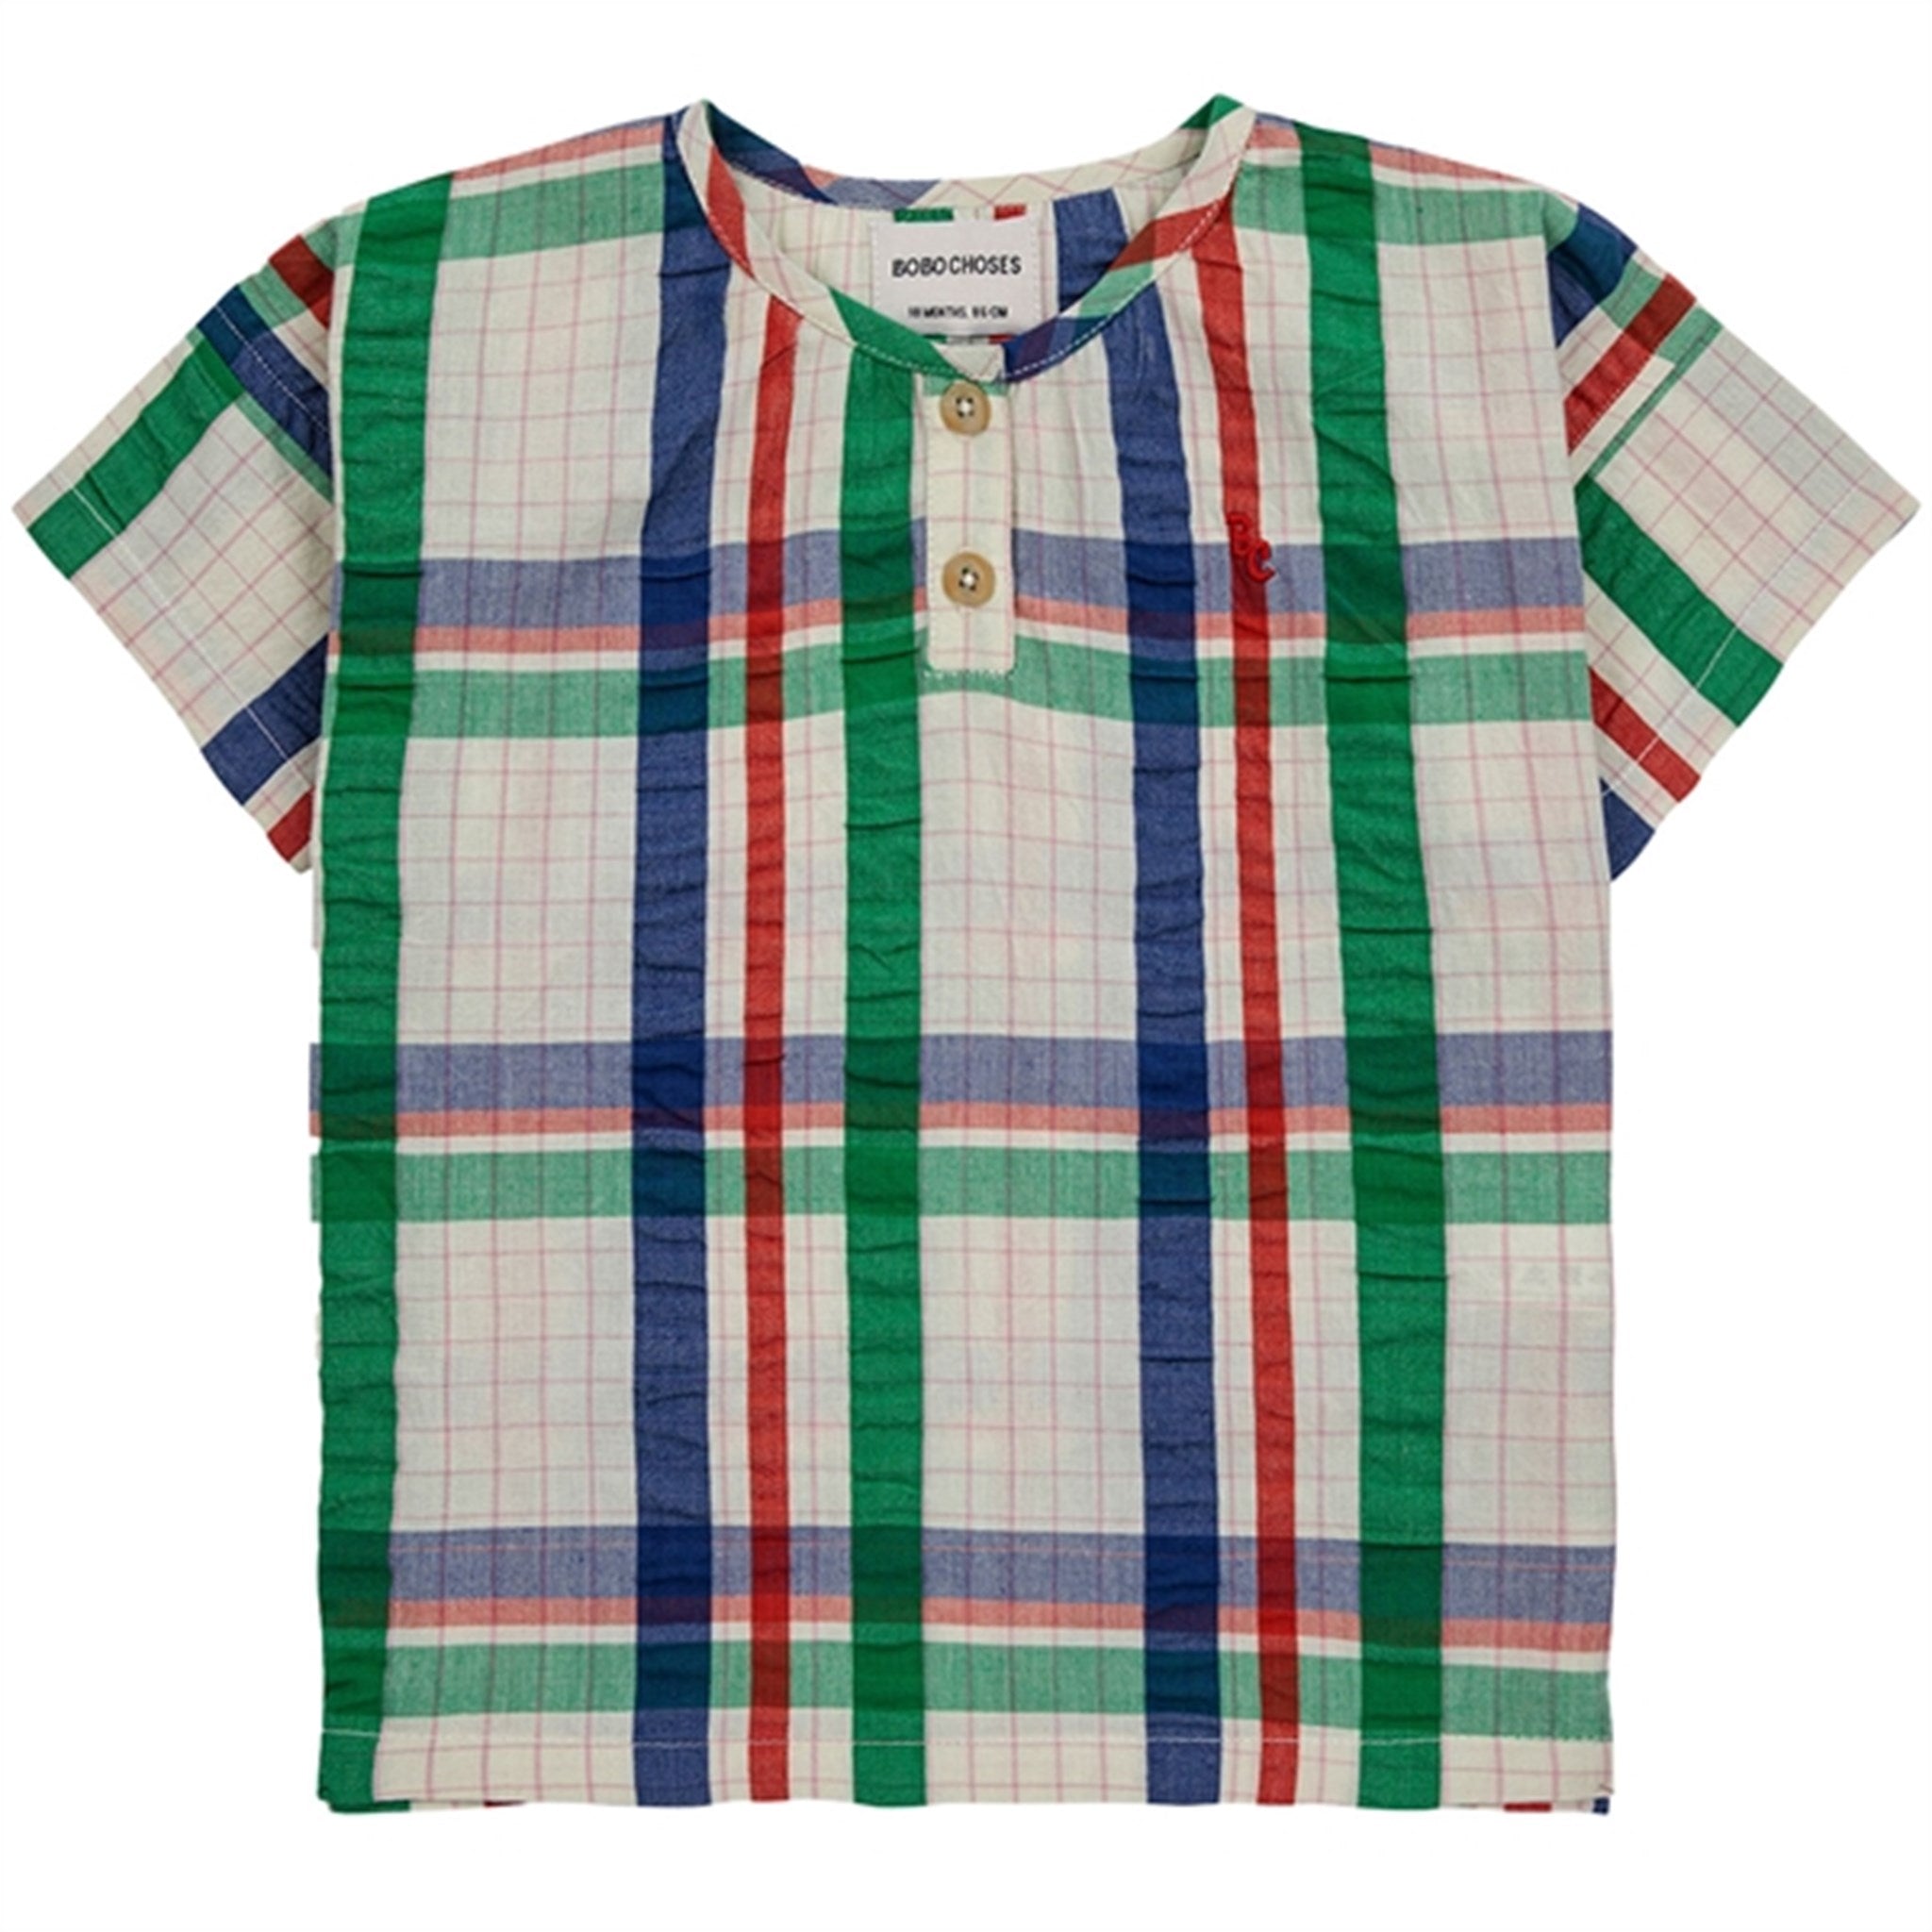 Bobo Choses Bebis Madras Checks Woven Shirt Short Sleeve Multicolor